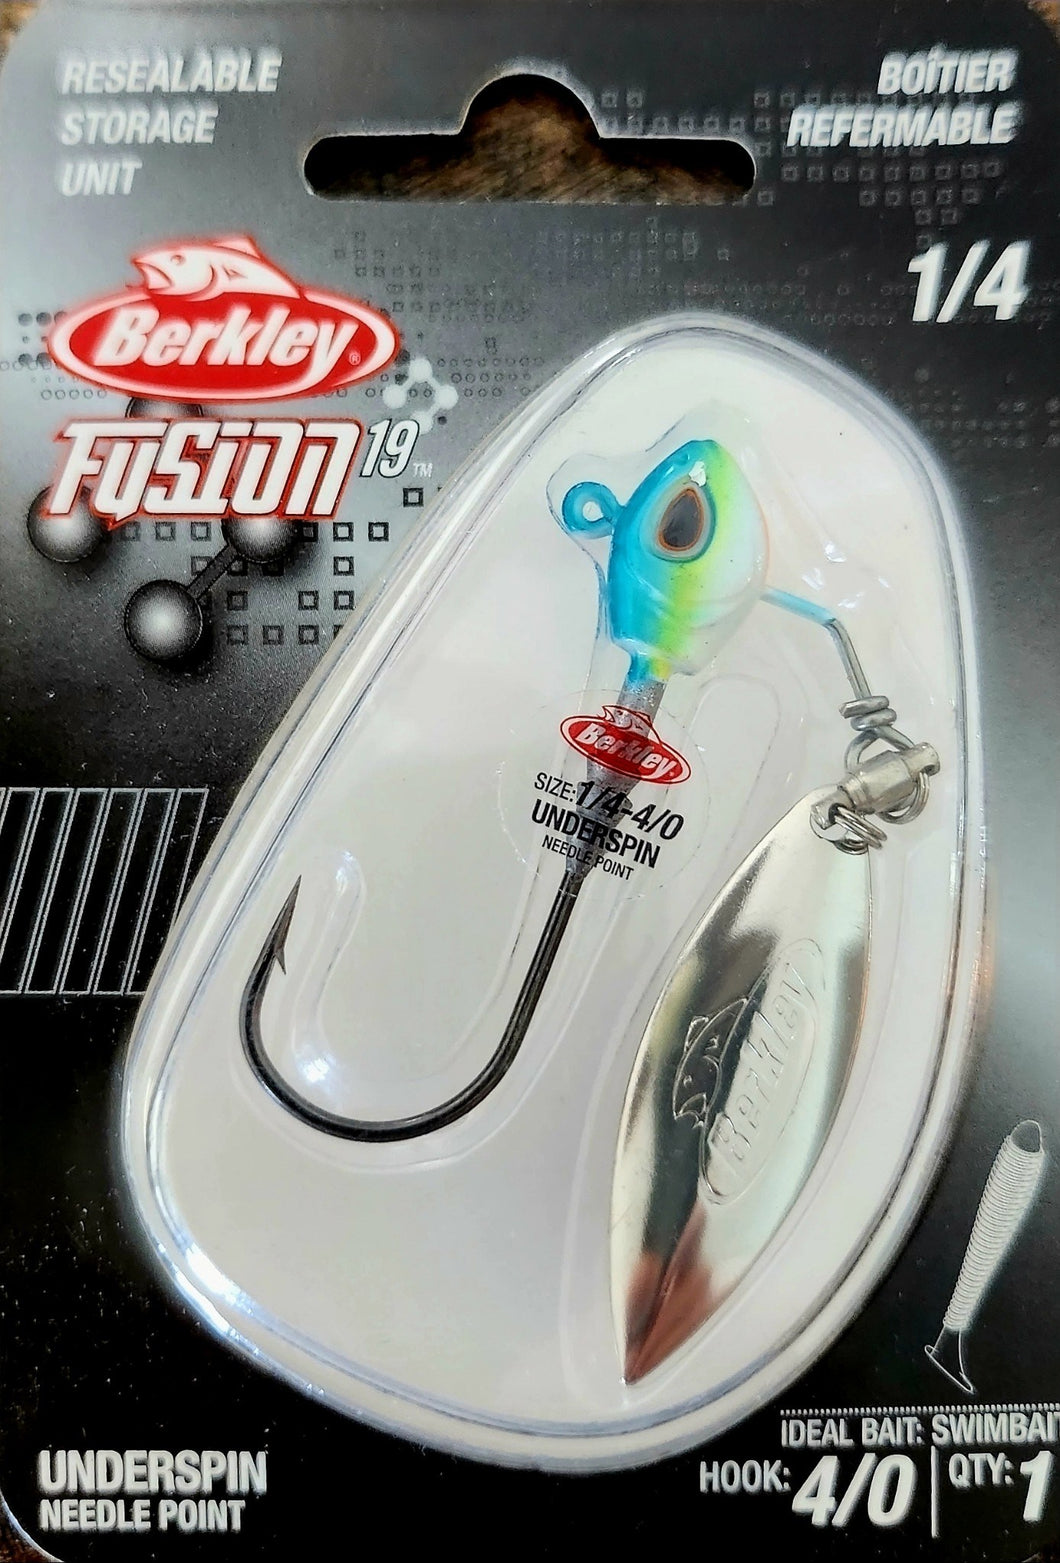 Berkley Fusion 19 underspin 1/4  Hook 4/0